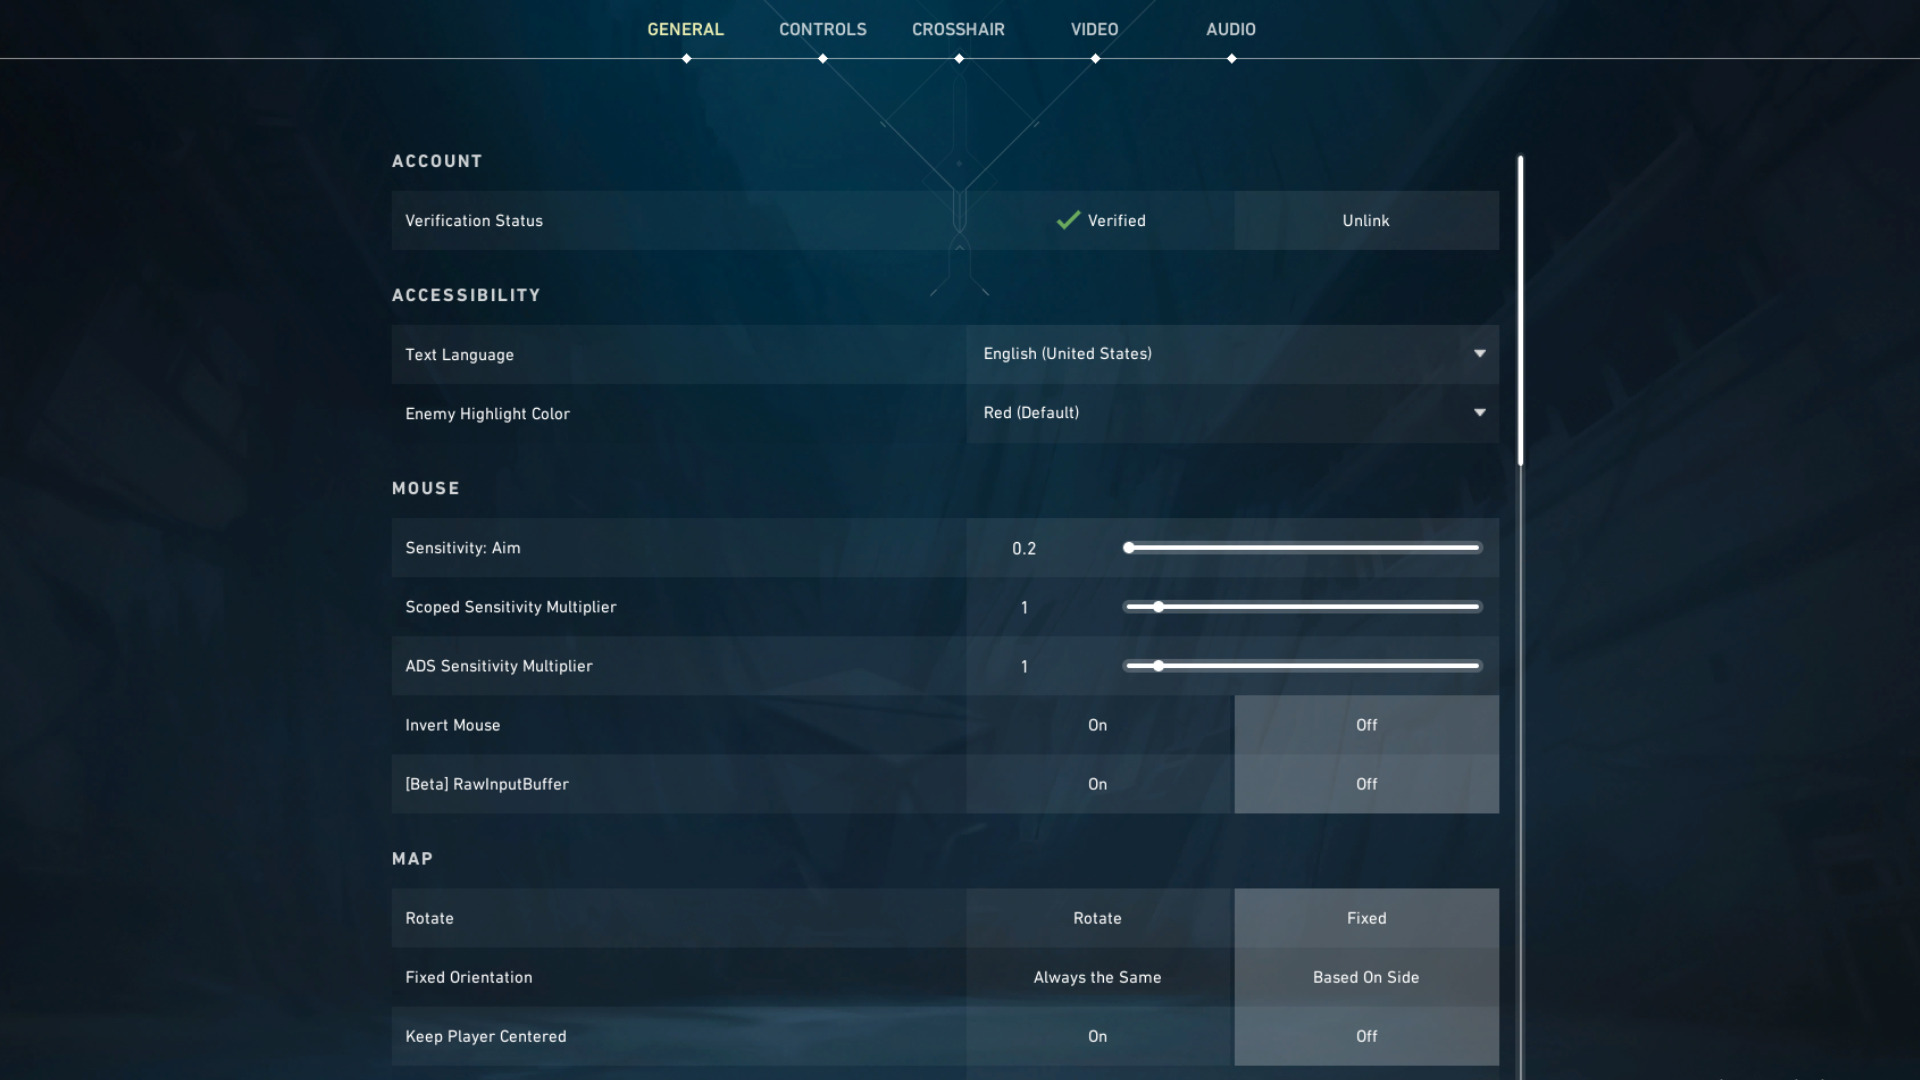 A screenshot of the settings menu in Valorant